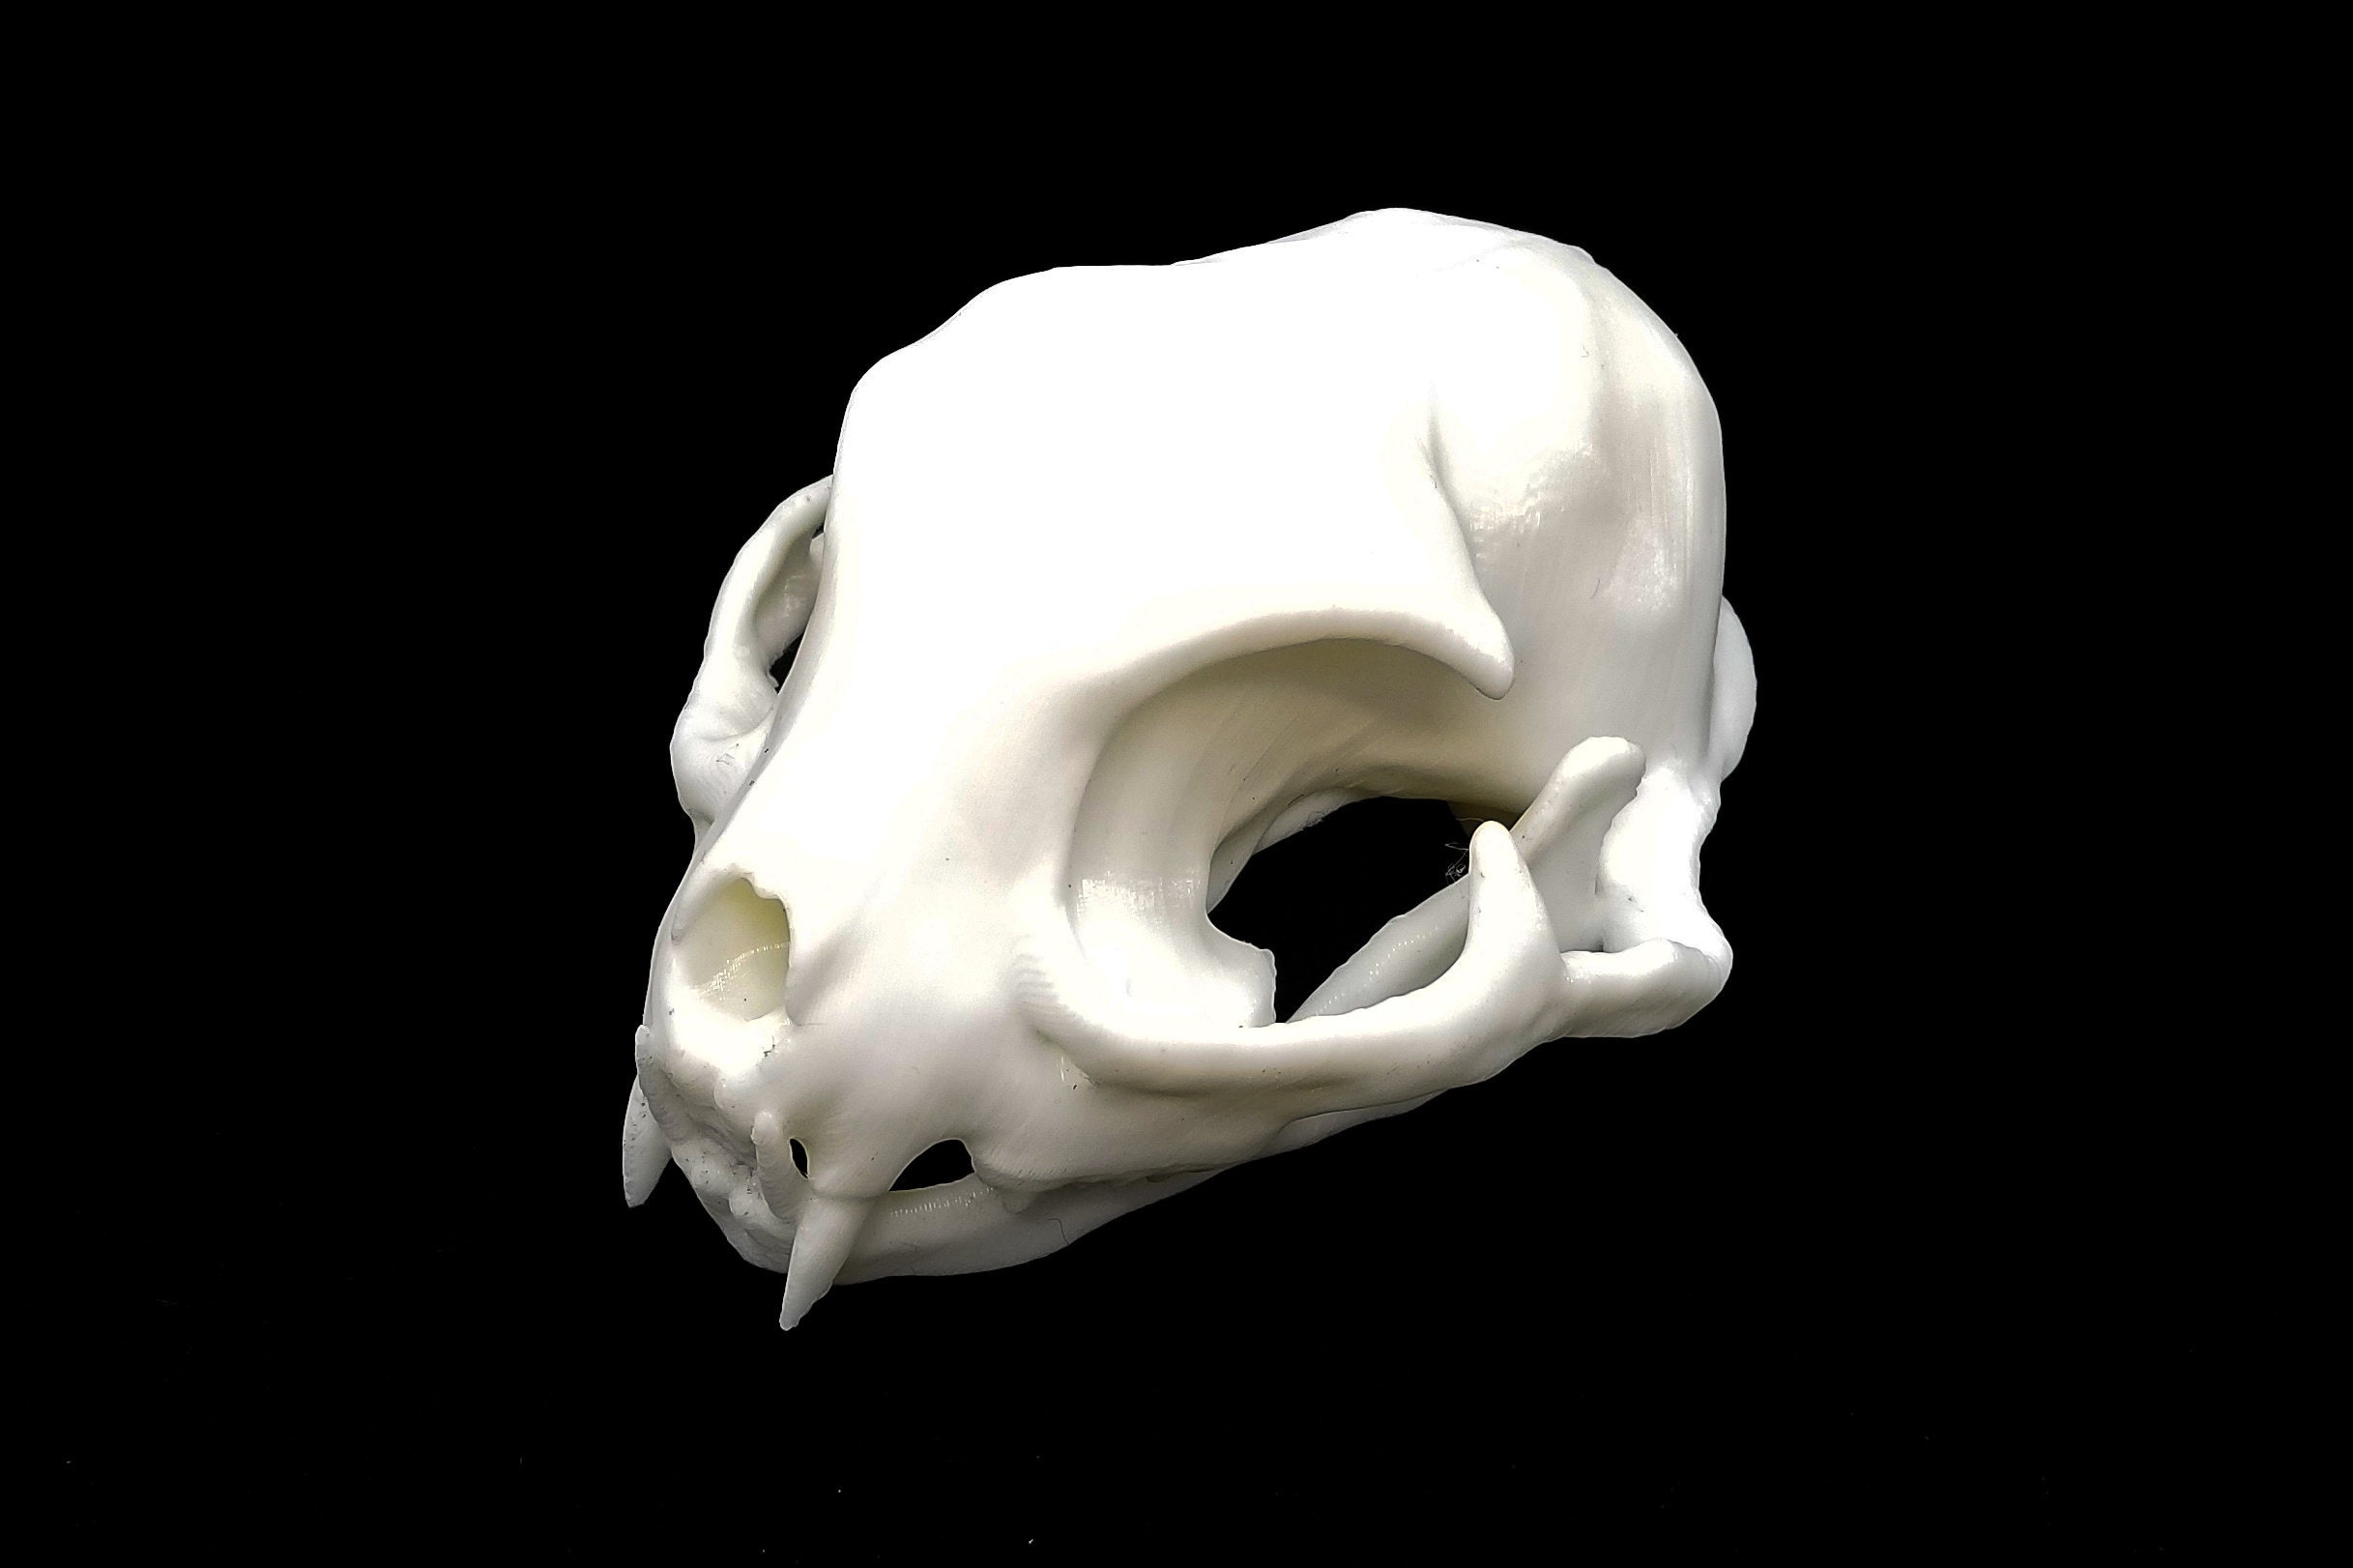  POPETPOP 2pcs Cat Skull Realistic Animal Skull Bone